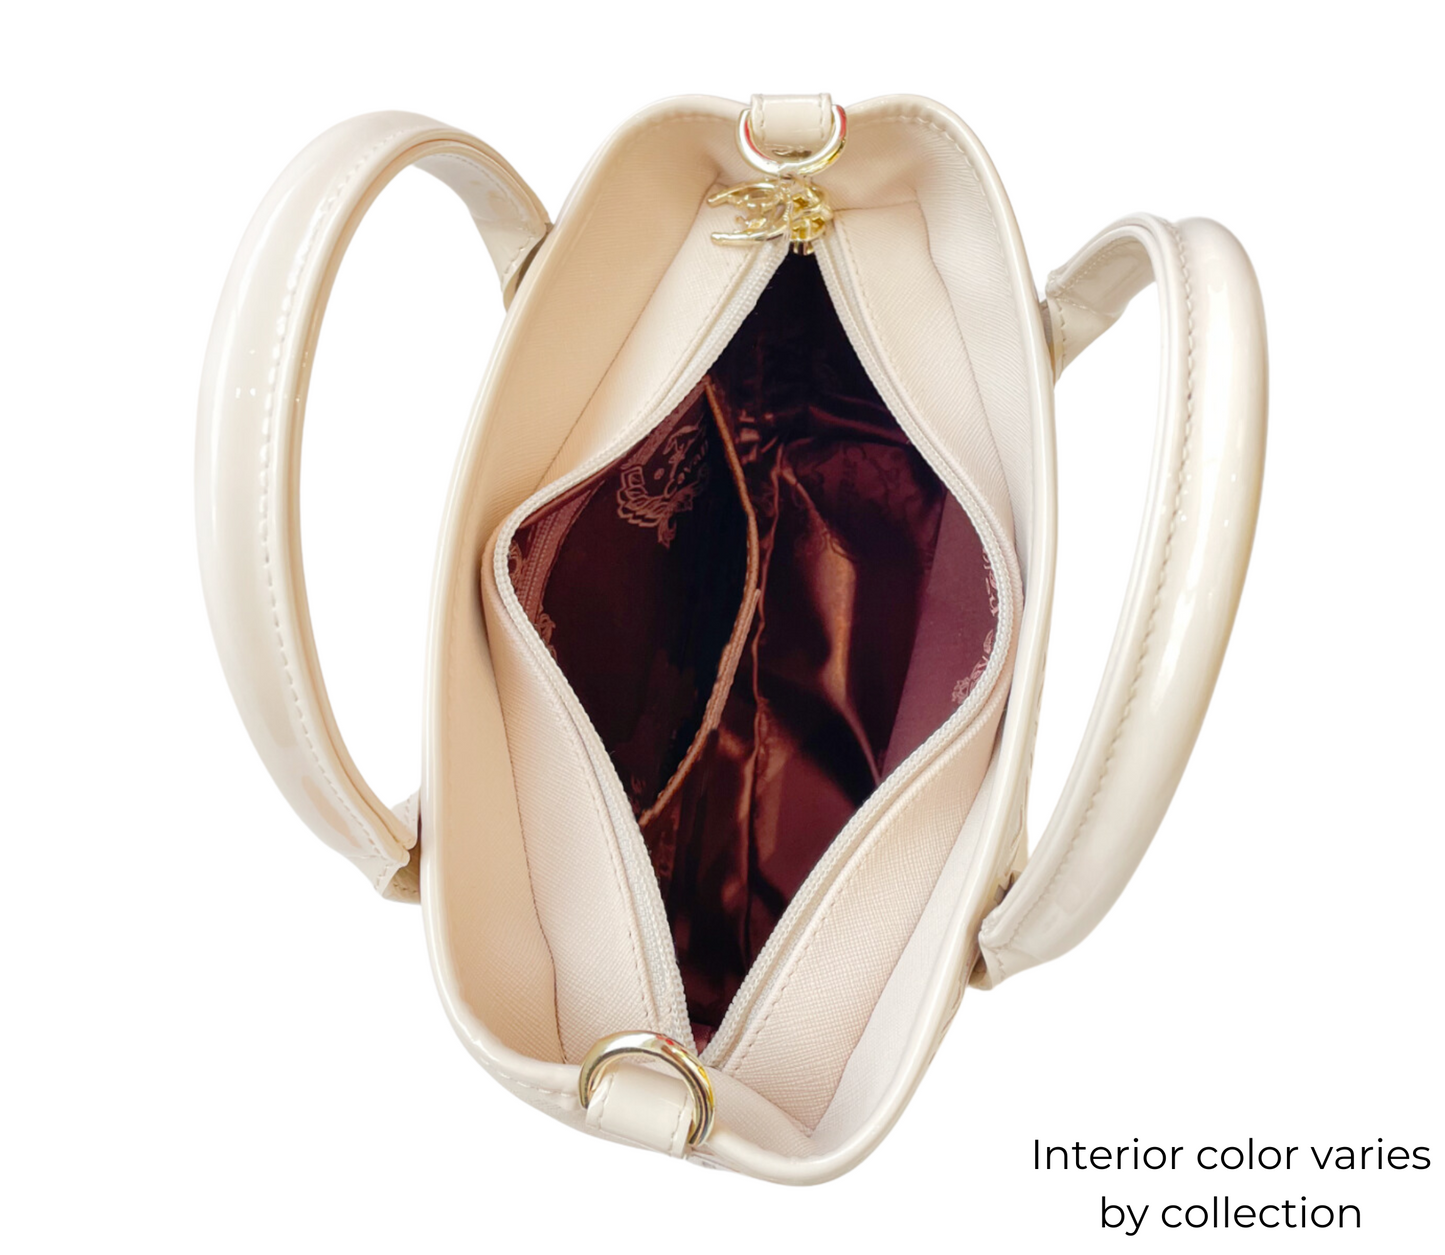 Cavalinho Ciao Bella Mini Handbag - Black - 18060243.01-Interior0243.05